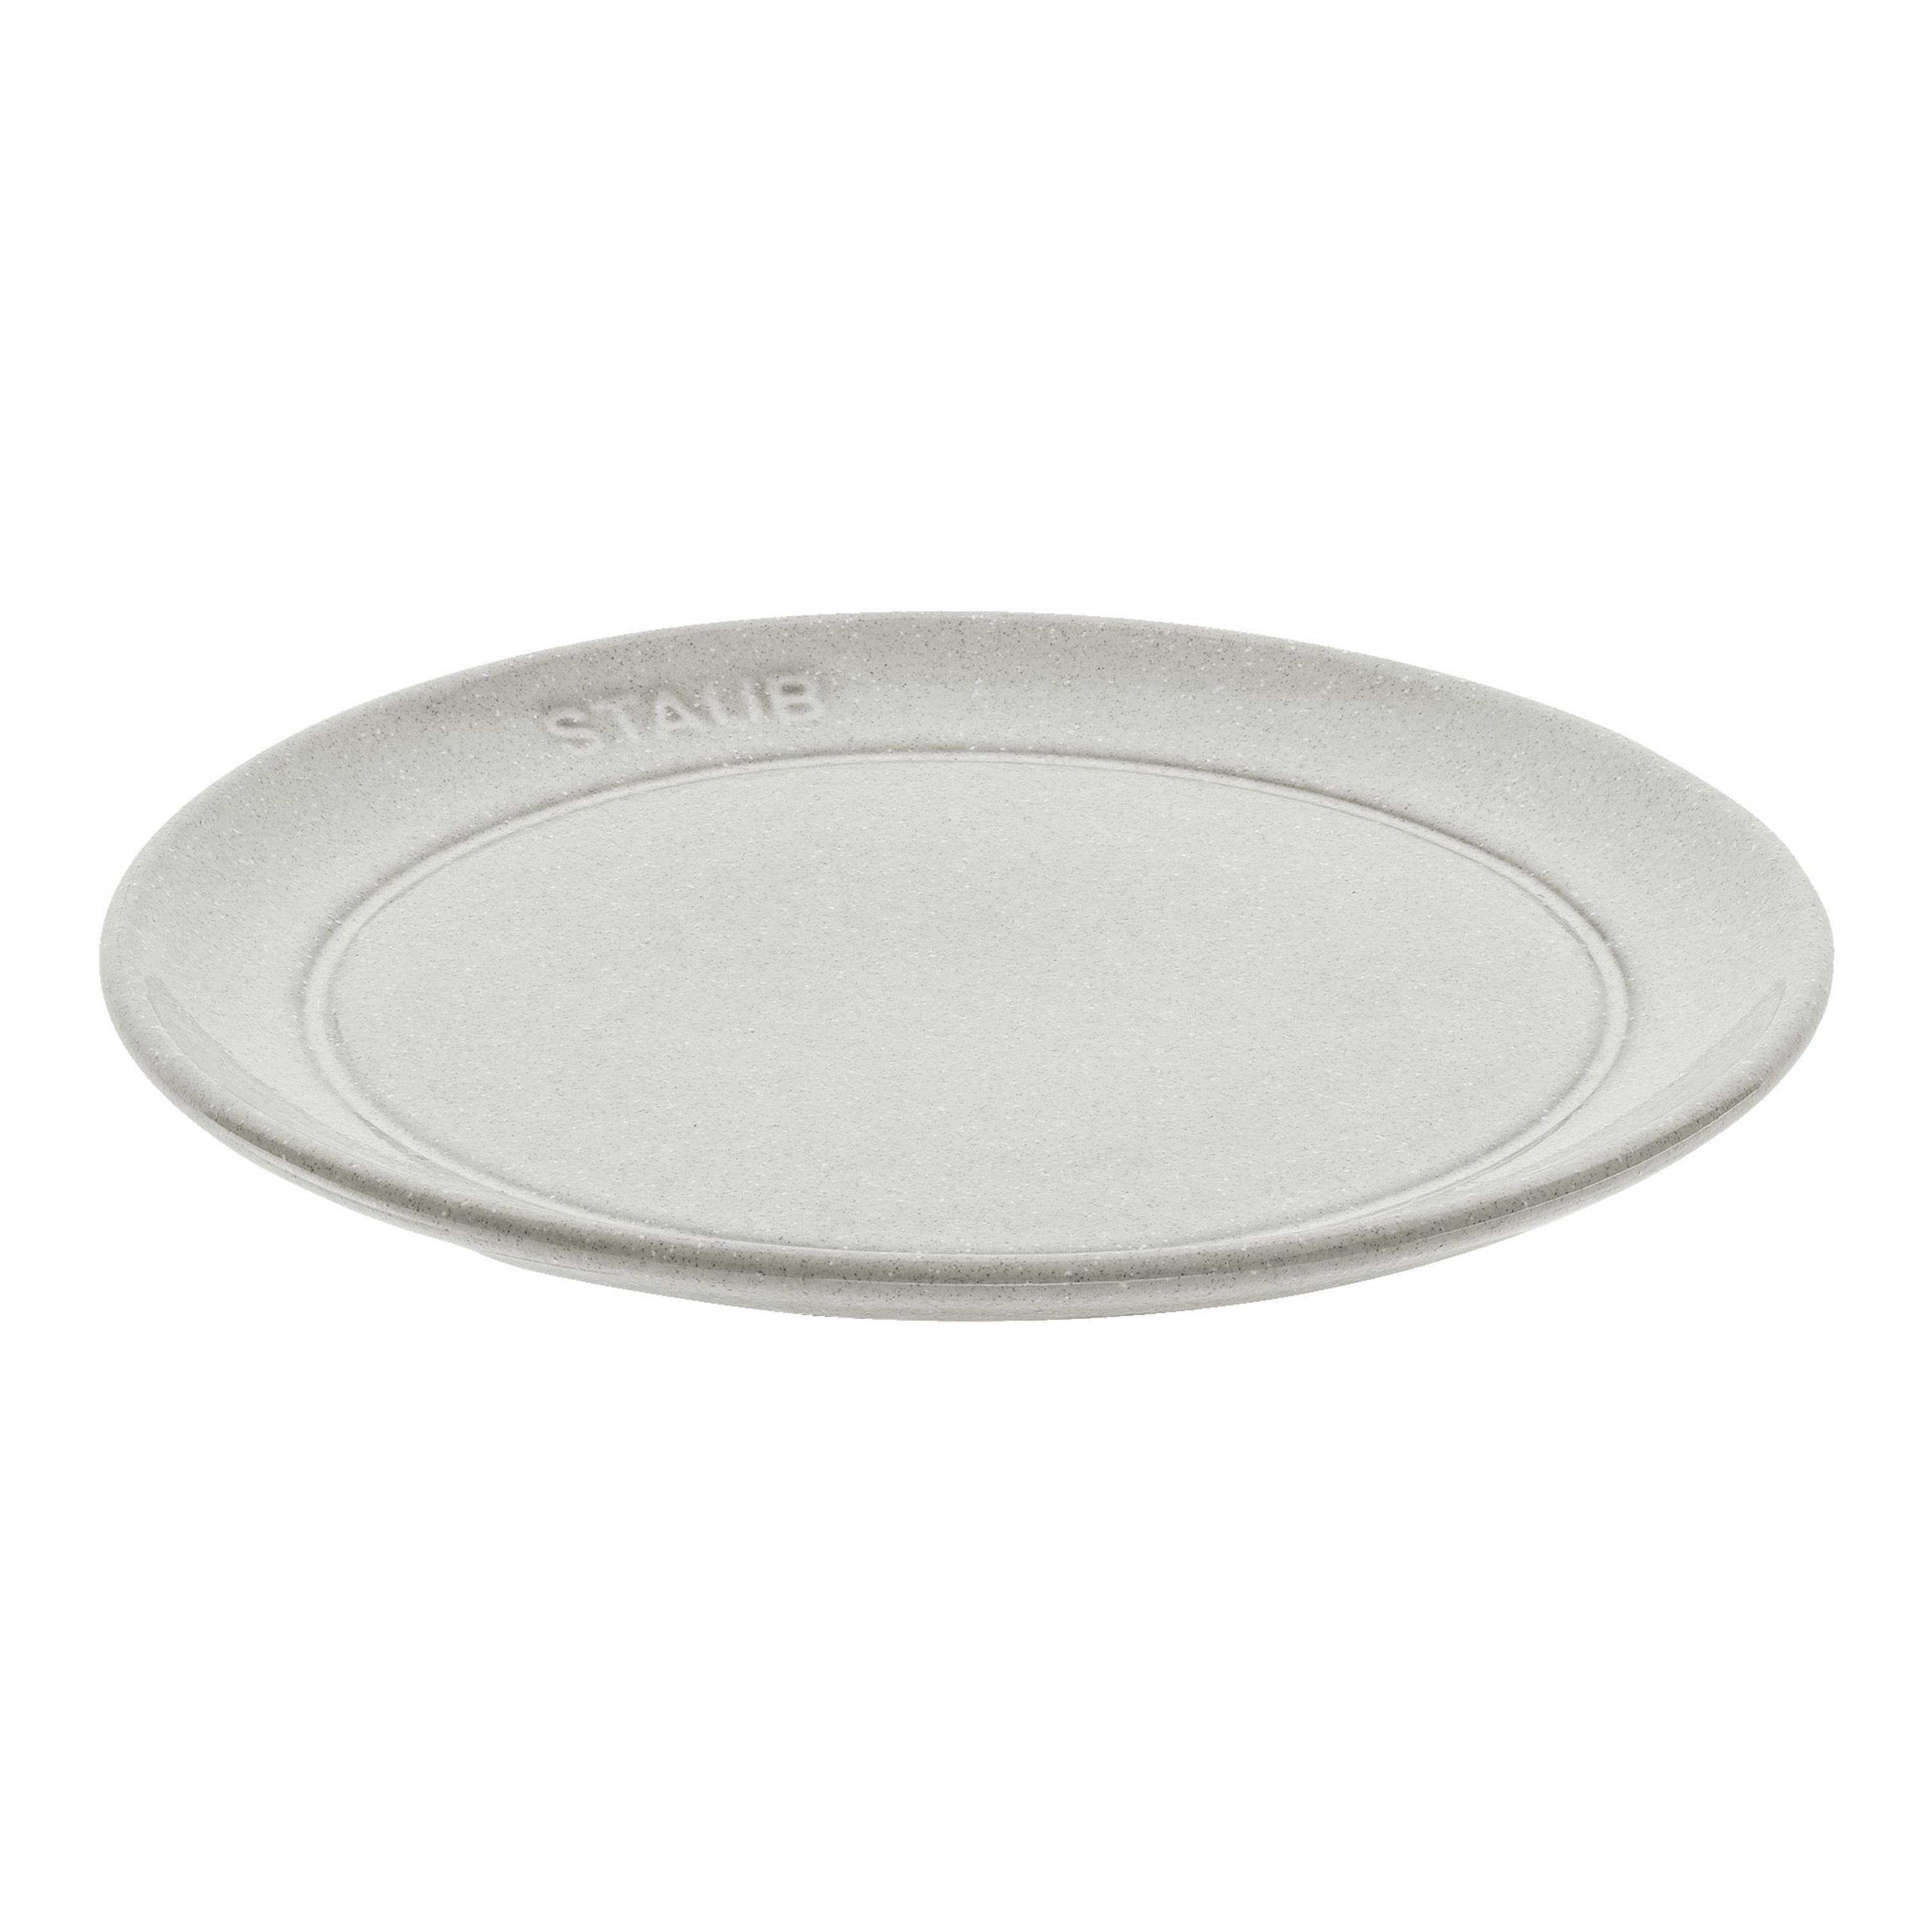 Staub Dining Line Piatto piano rotondo - 15 cm, tartufo bianco